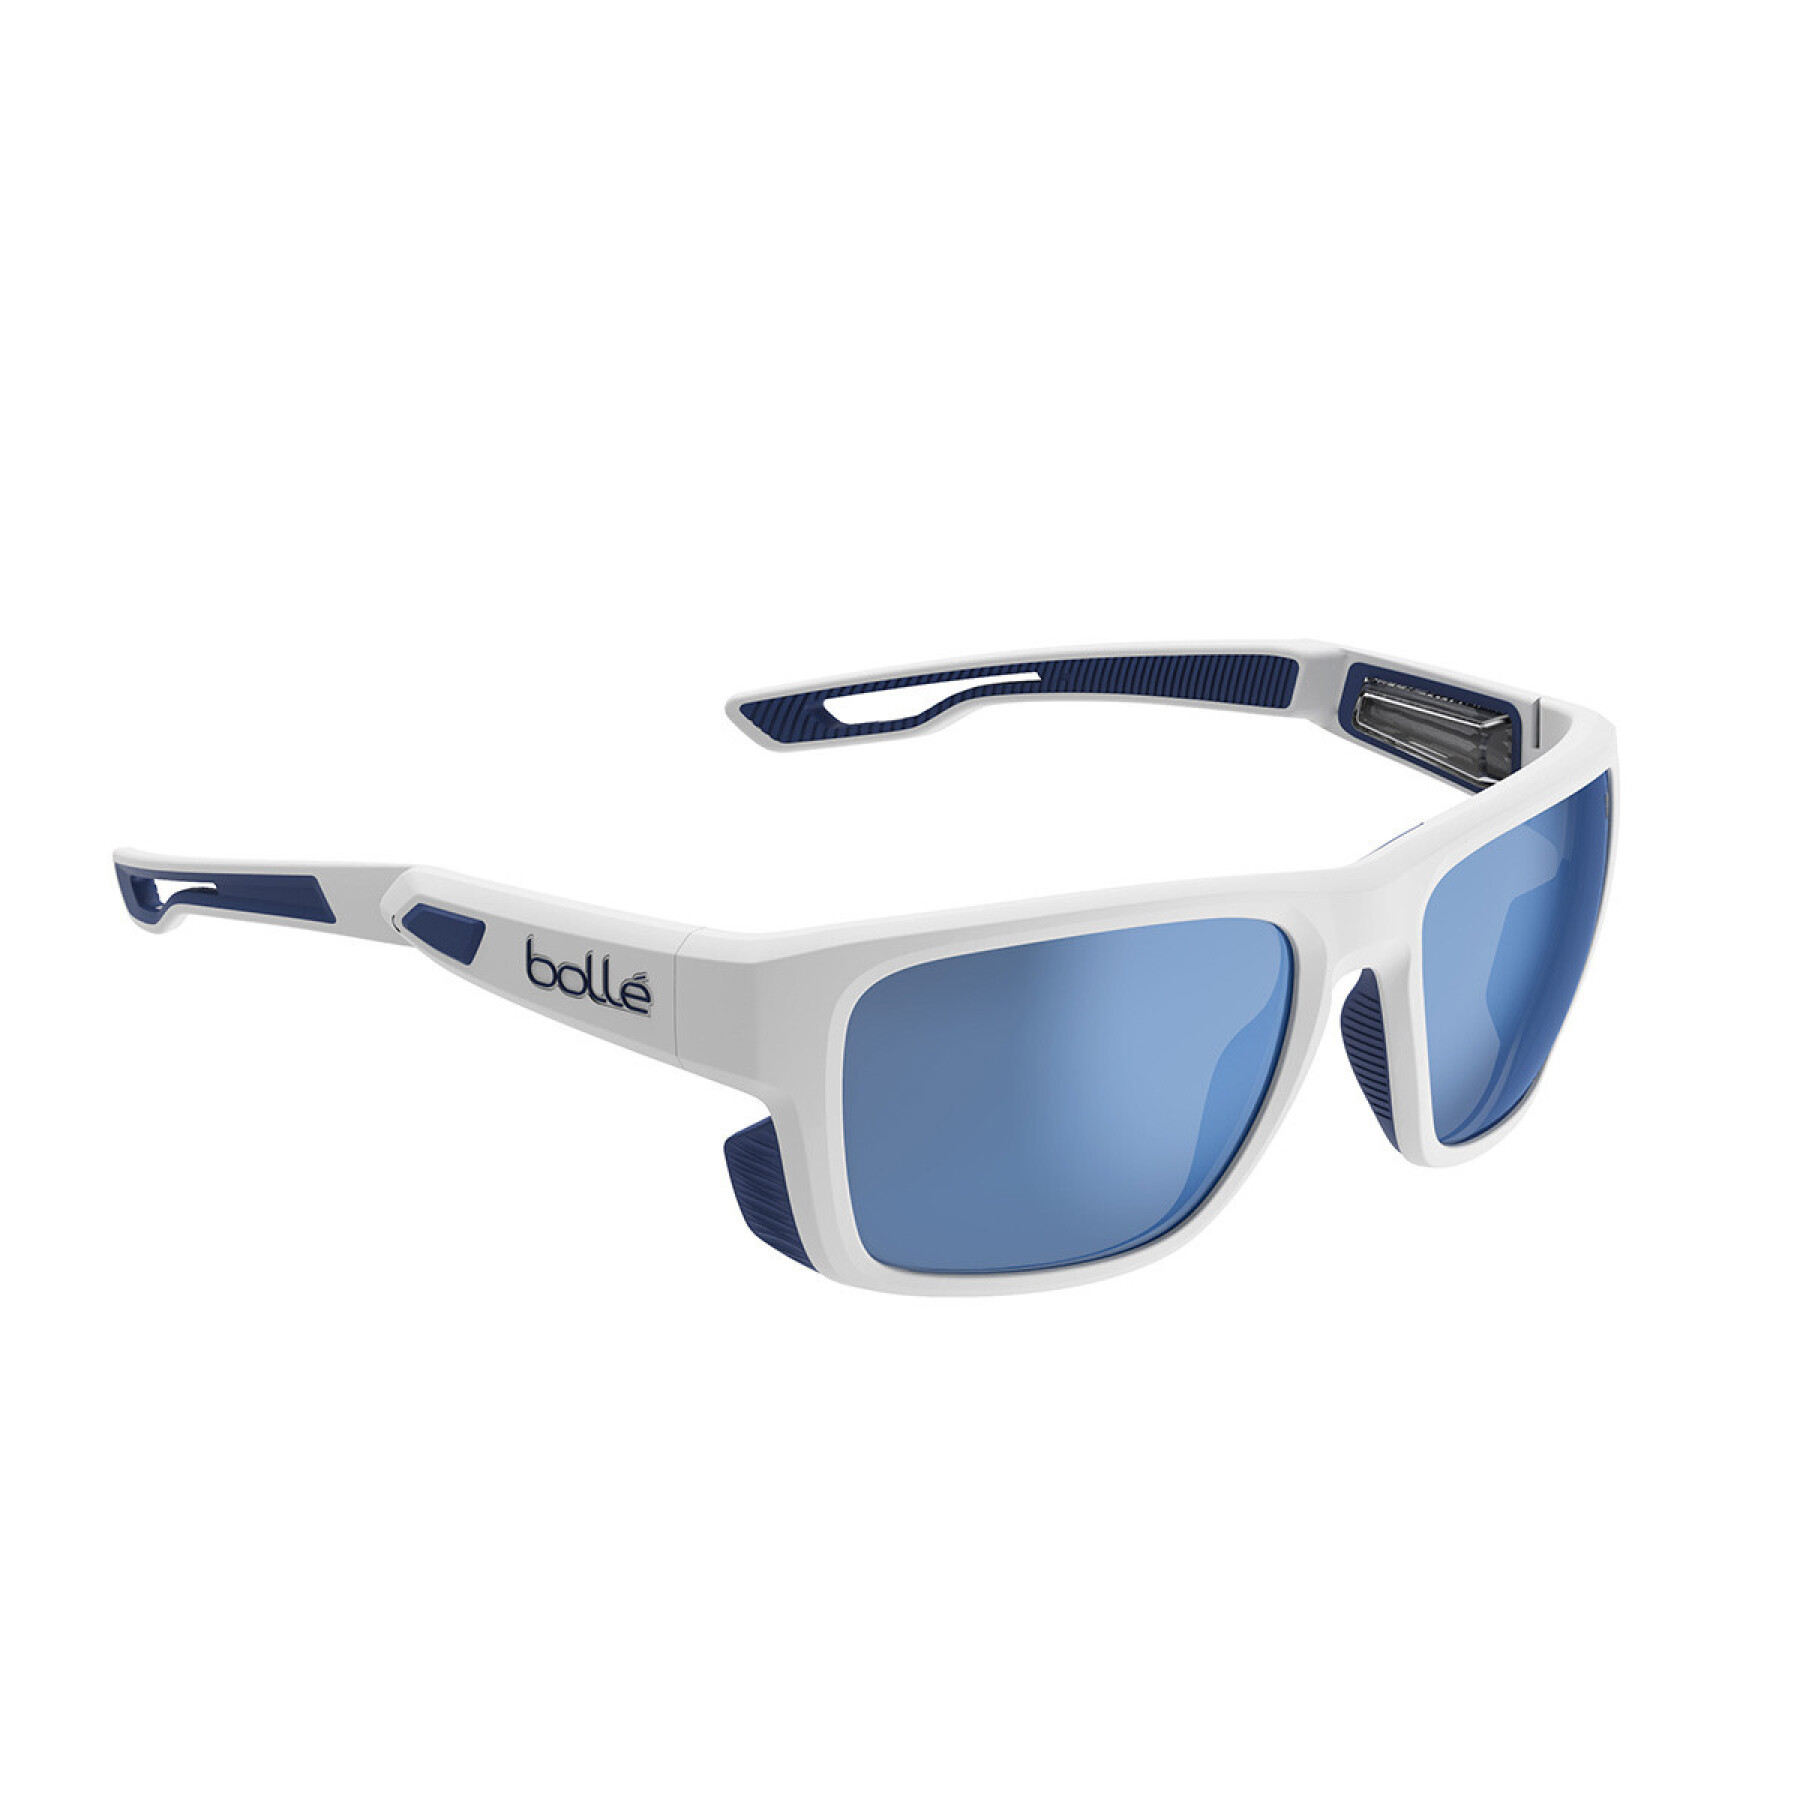 Sunglasses Bollé Airdrift